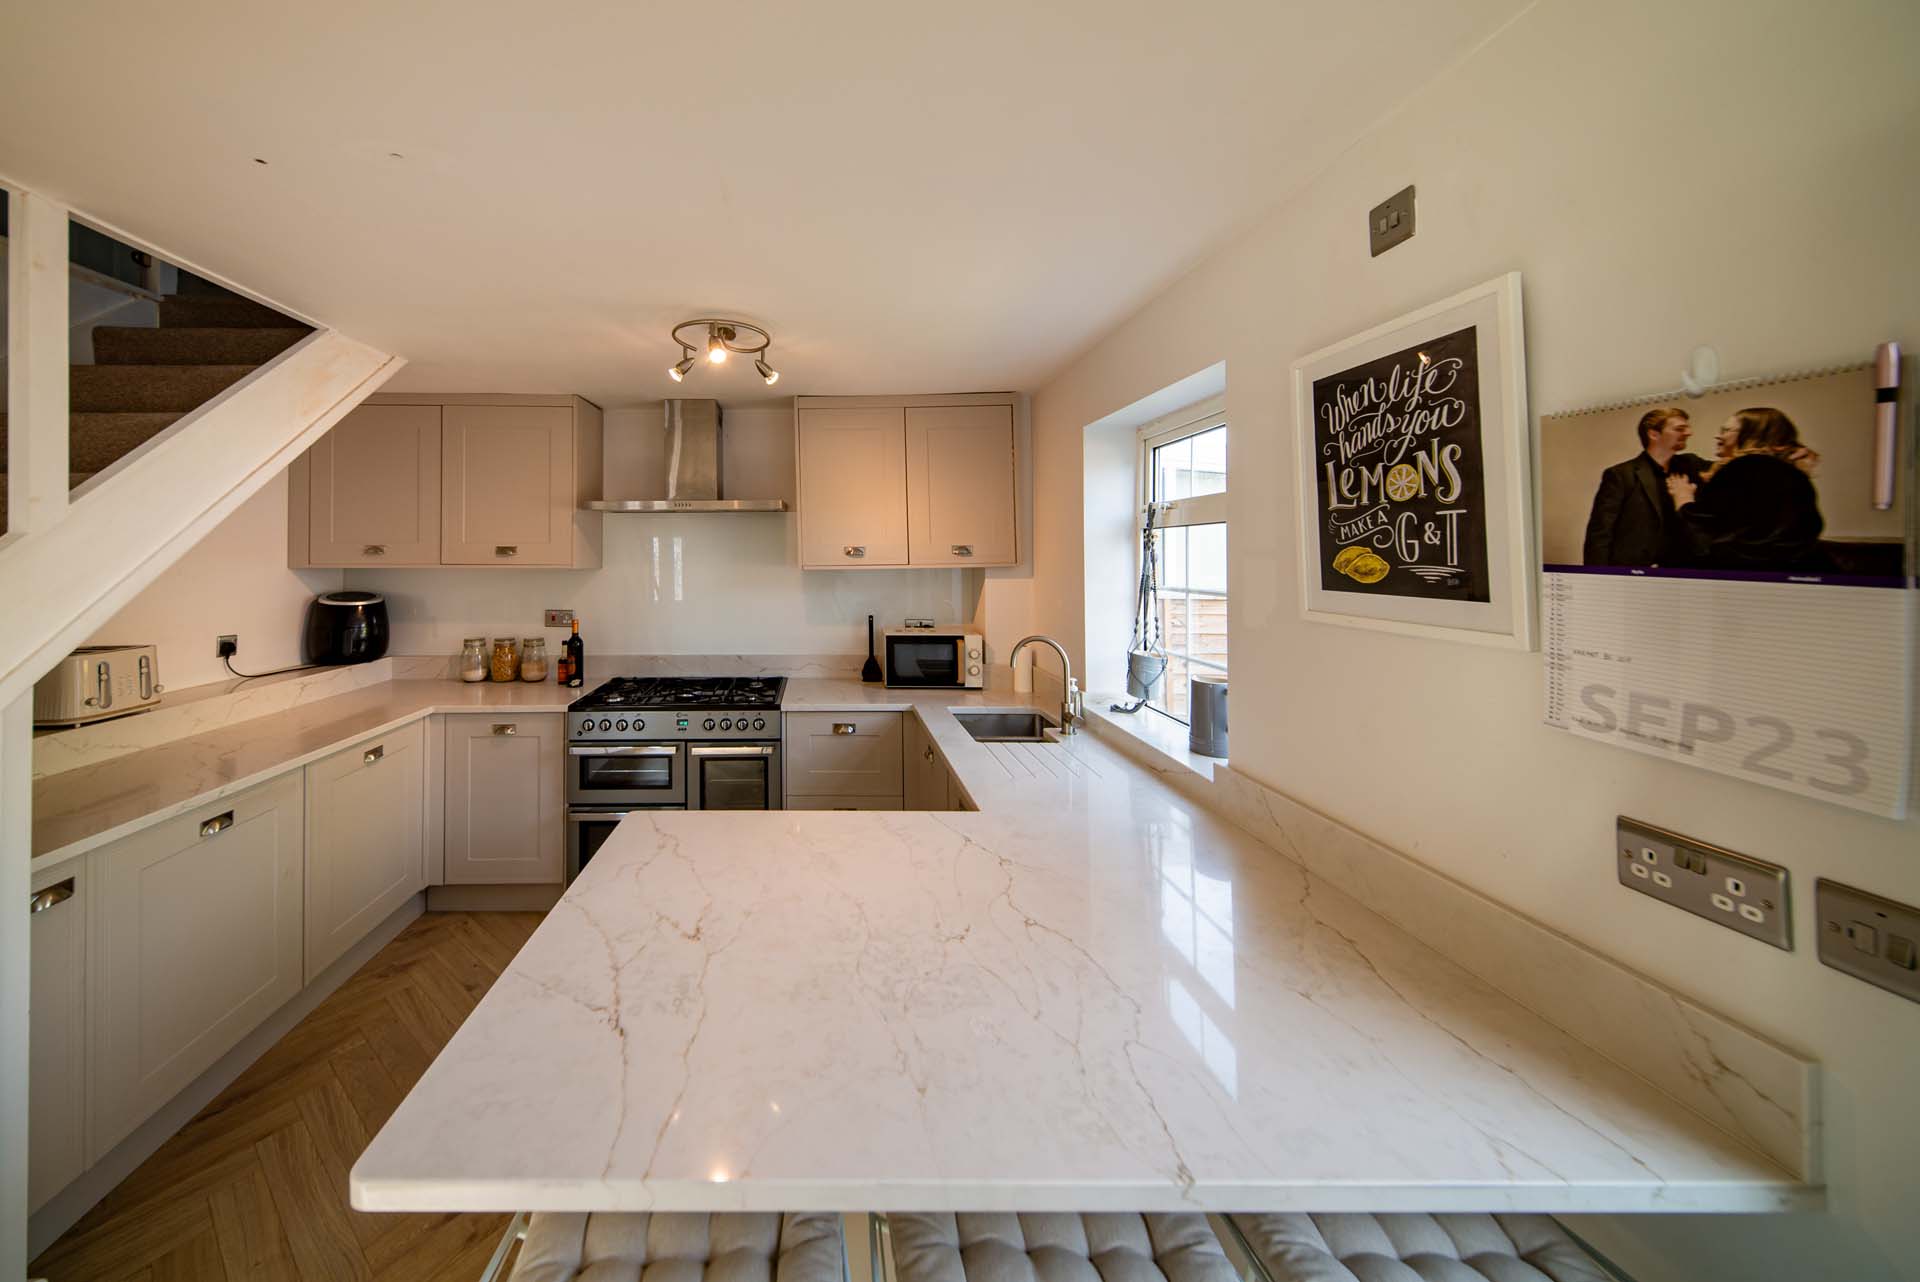 Affordable Granite Snodland Kent kitchen BQS capri quartz worktops Bromley interiors photographer